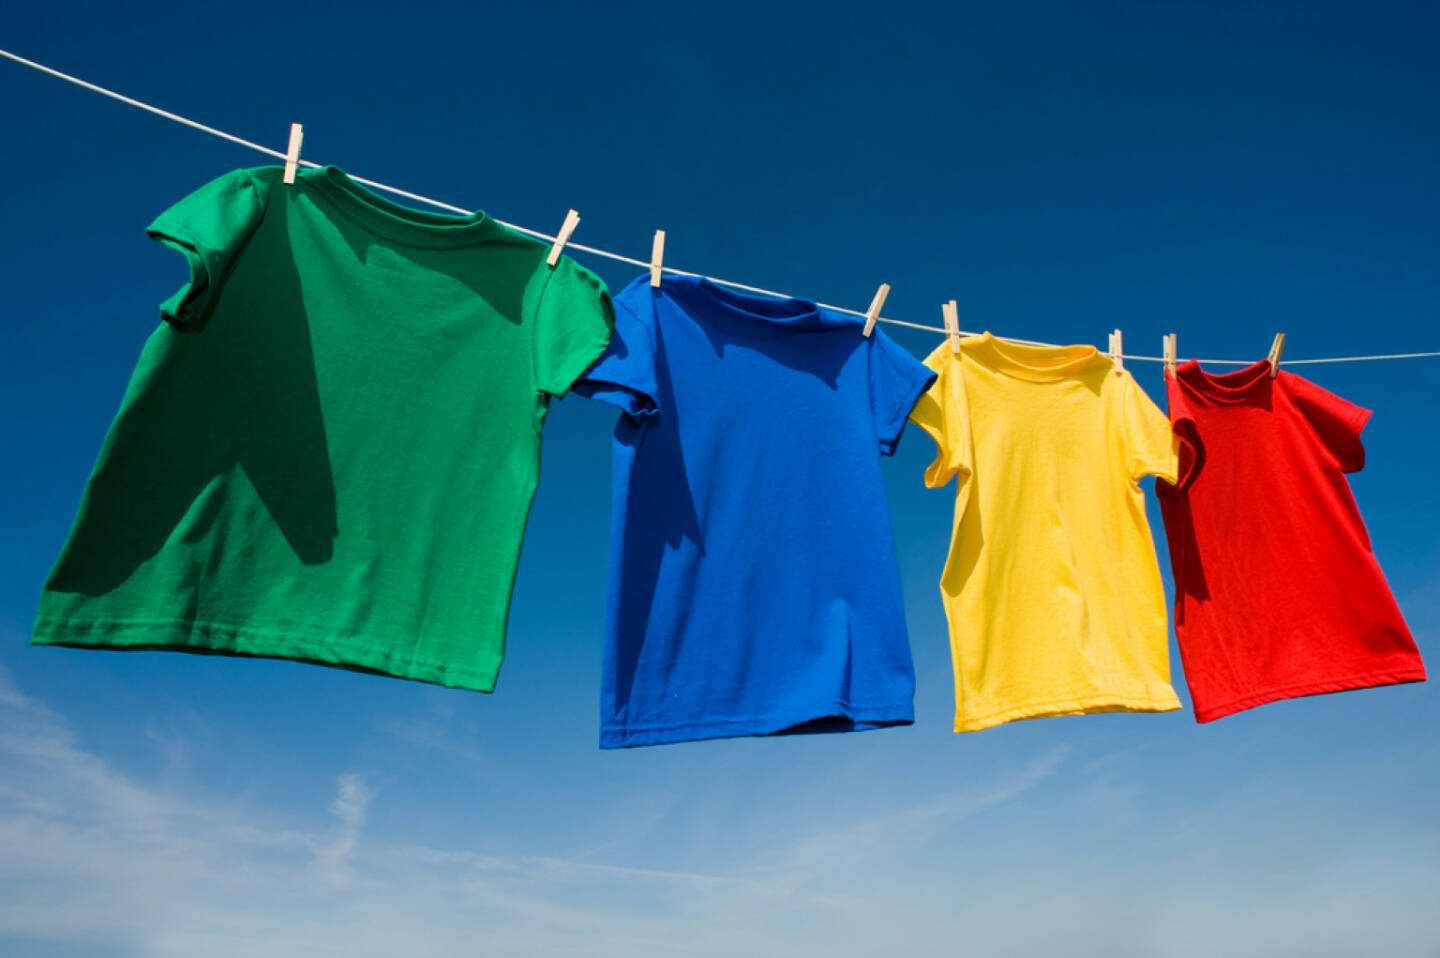 Wäsche, Wäscheleine, aufhängen, waschen, sauber, http://www.shutterstock.com/de/pic-37216123/stock-photo-a-group-of-primary-colored-t-shirts-on-a-clothesline-in-front-of-blue-sky.html 